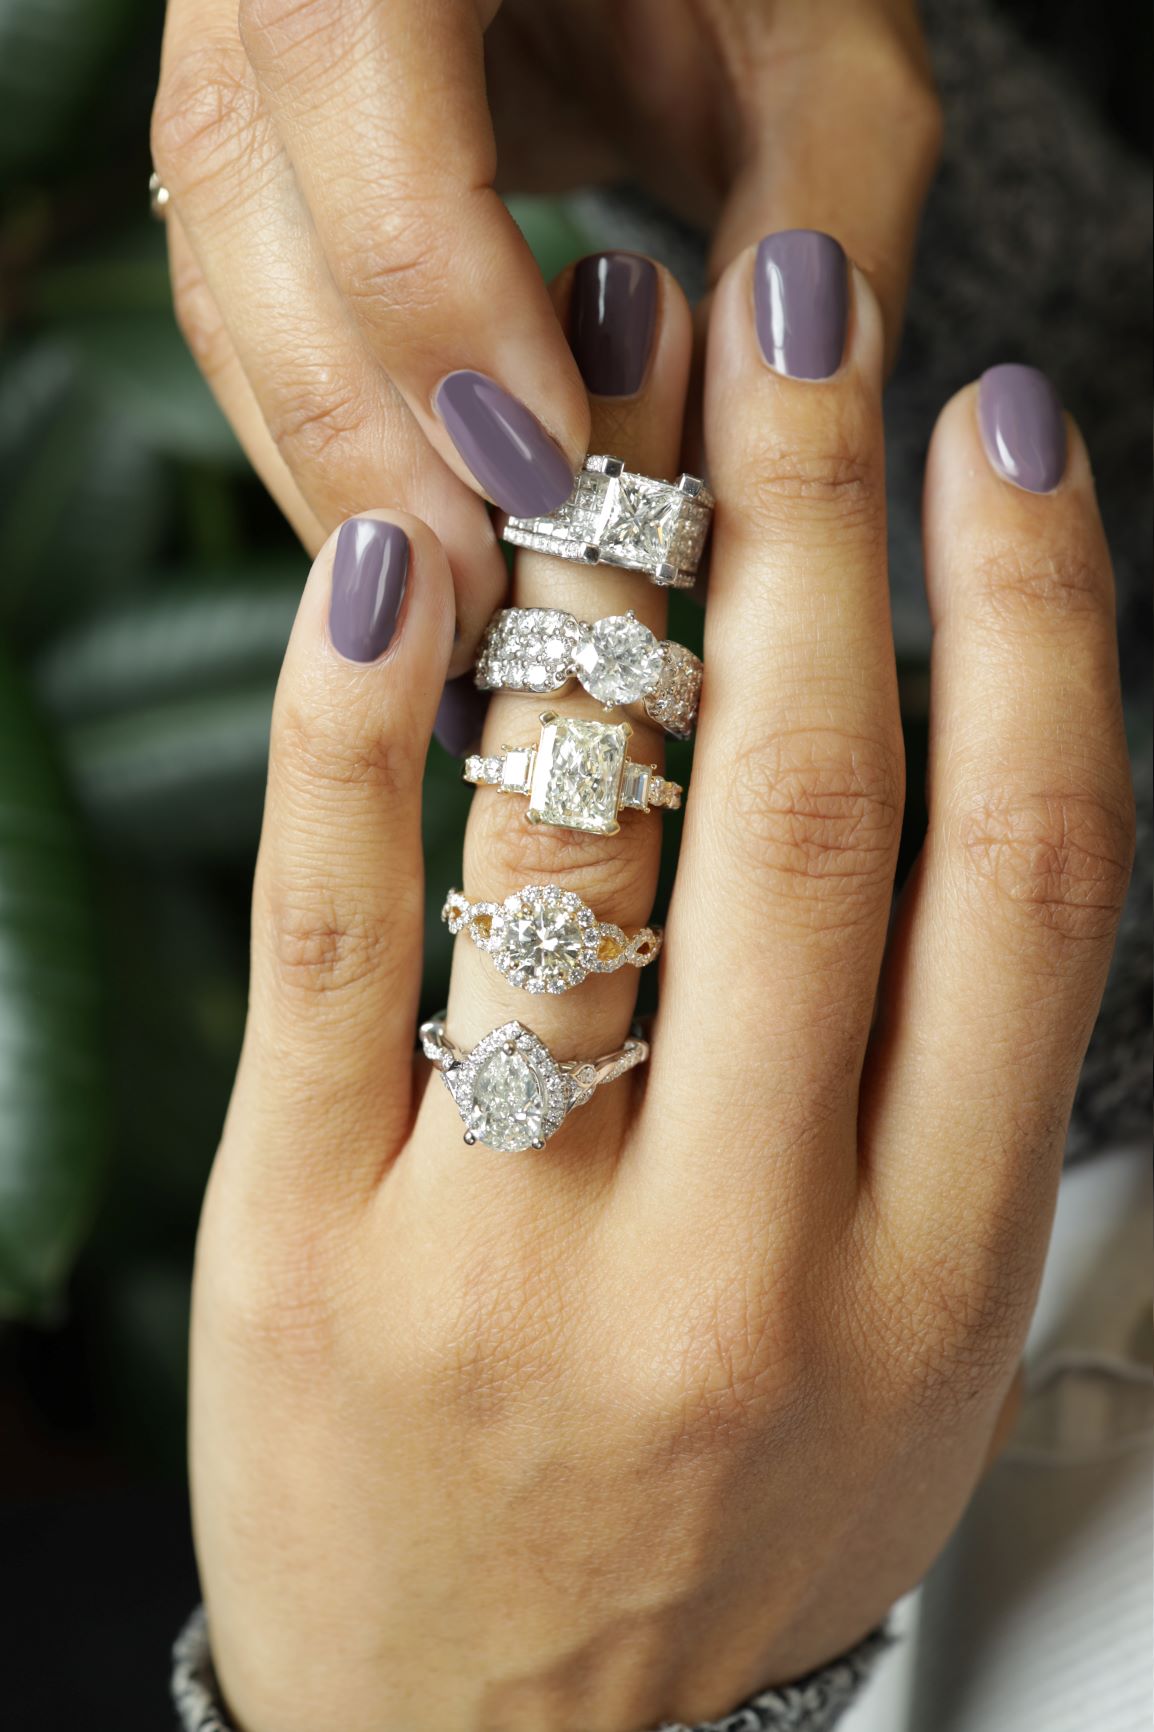 4 ctw Diamond Engagement Ring